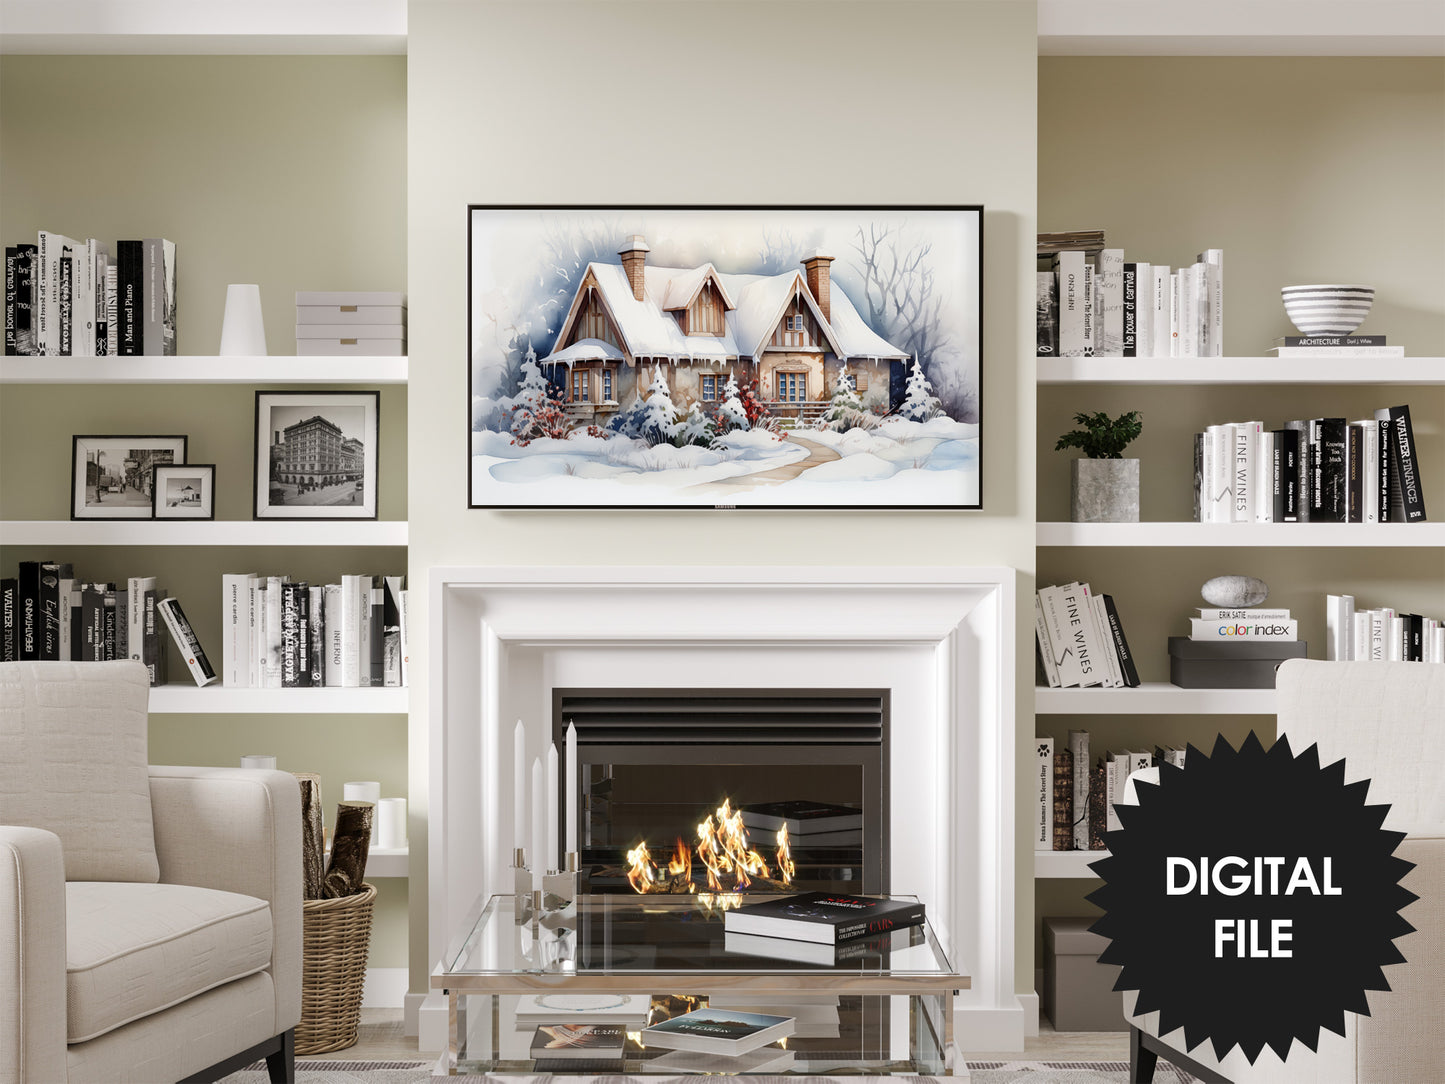 Christmas Frame TV Art | Charming Winter Cottage | Digital TV Art | Digital Watercolor Painting | Instant Download JPEG